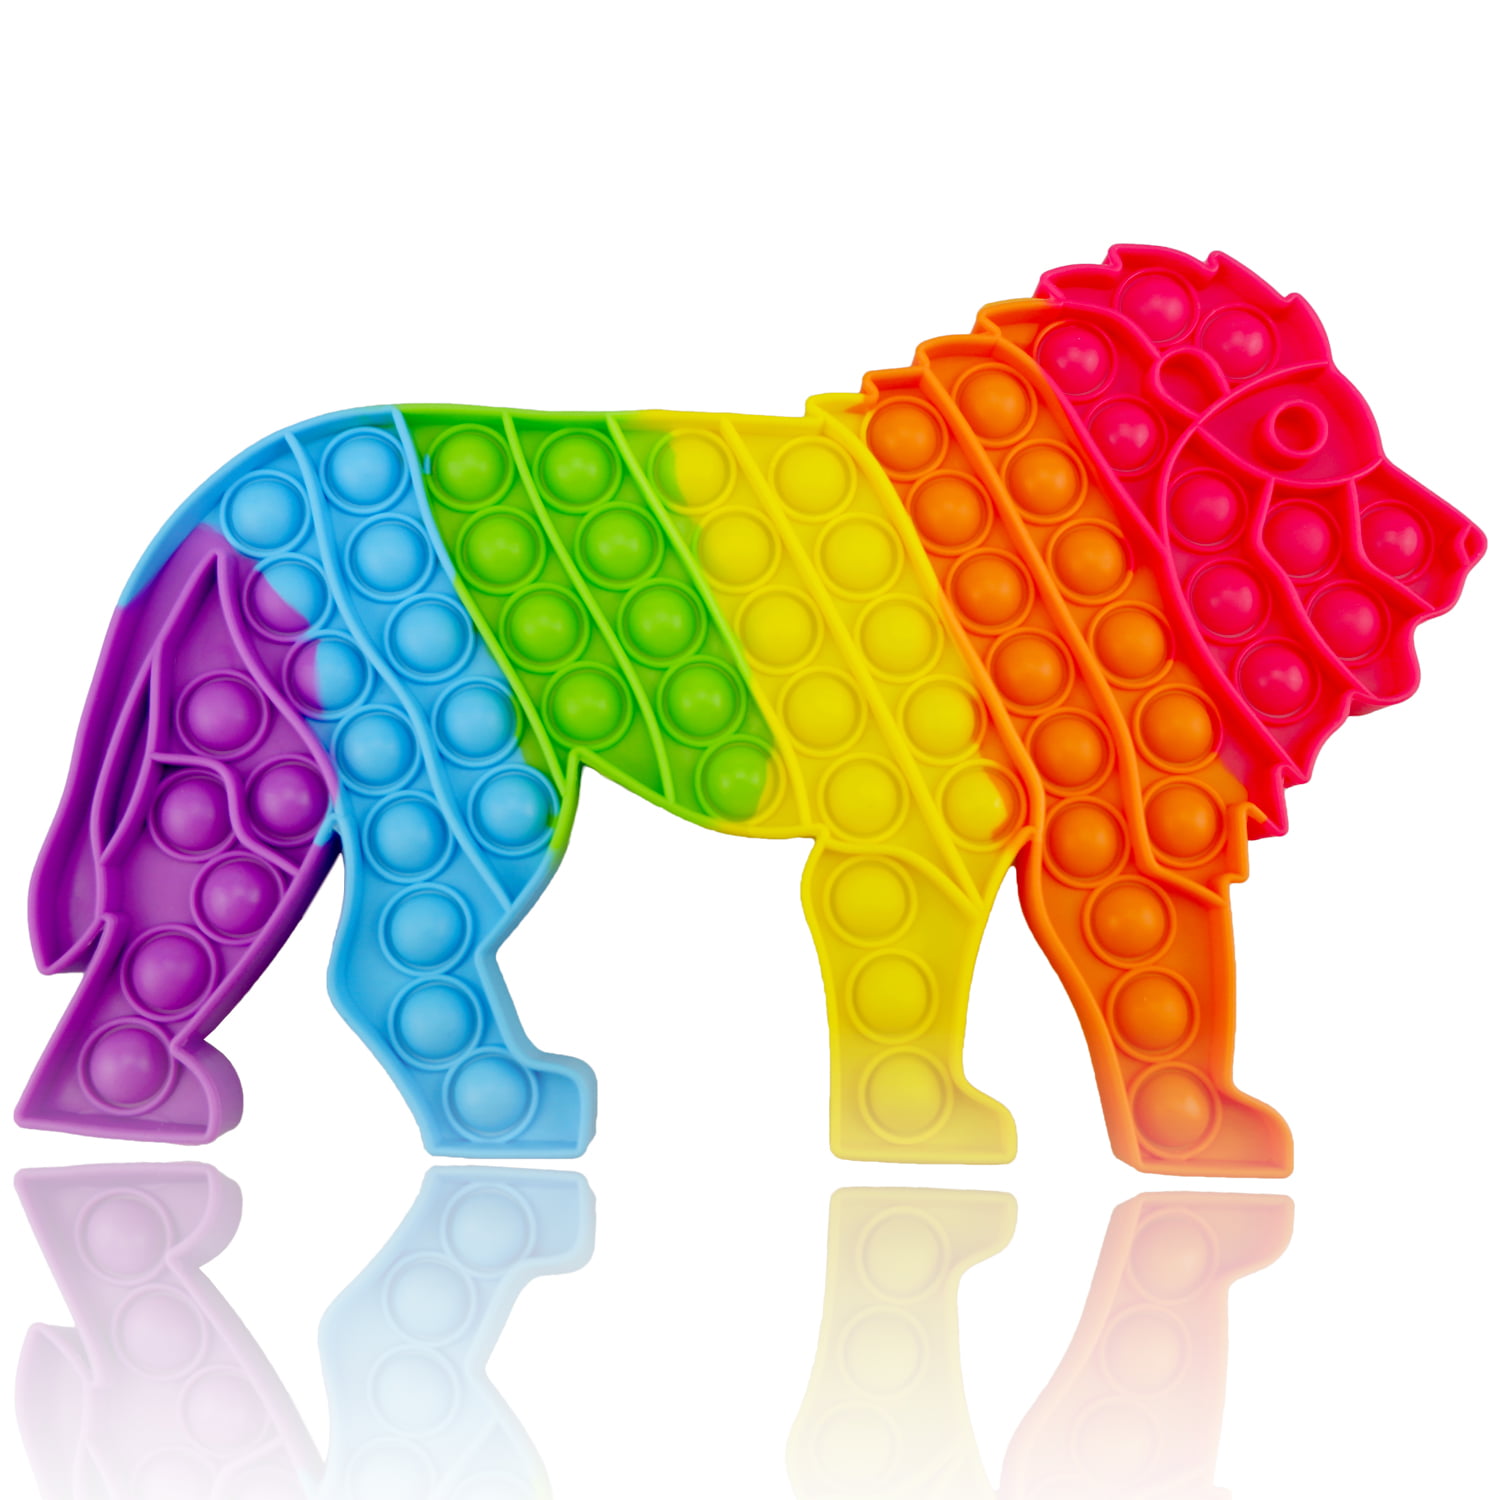 Pipsticks Big Puffy Rainbow Cheetah